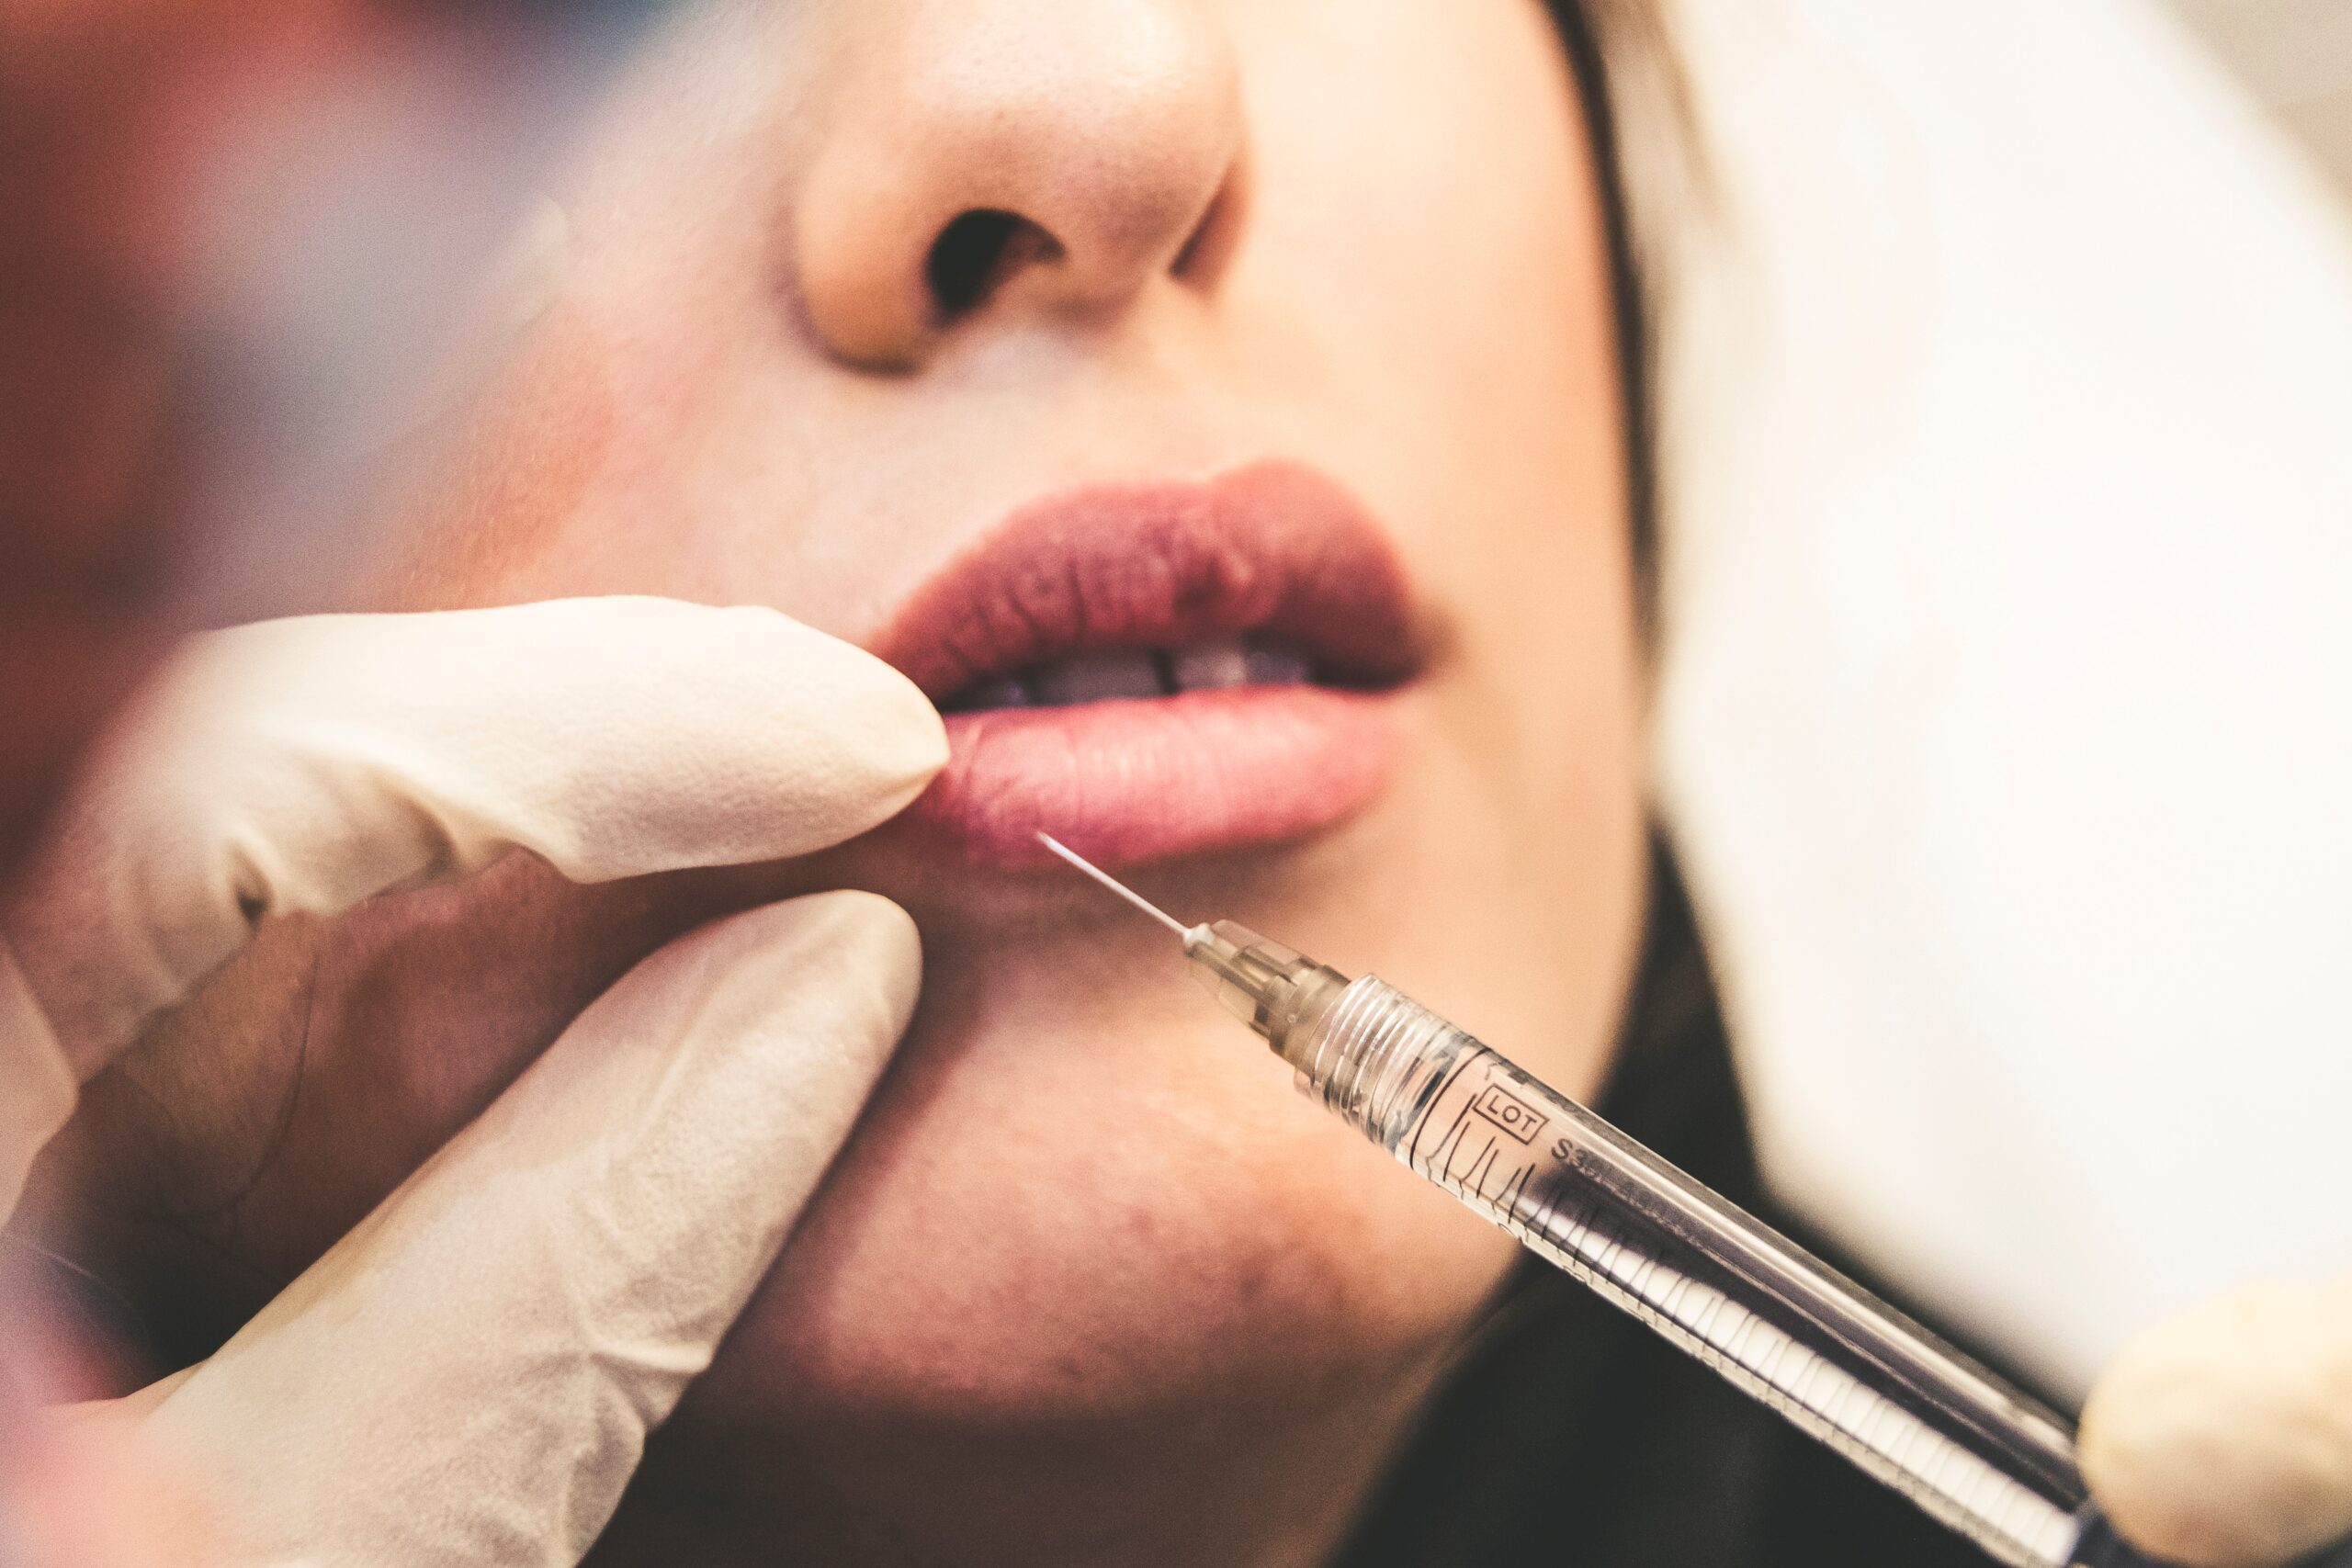 Lip Injections - Dr Joseph Franzese Talks About Juvederm